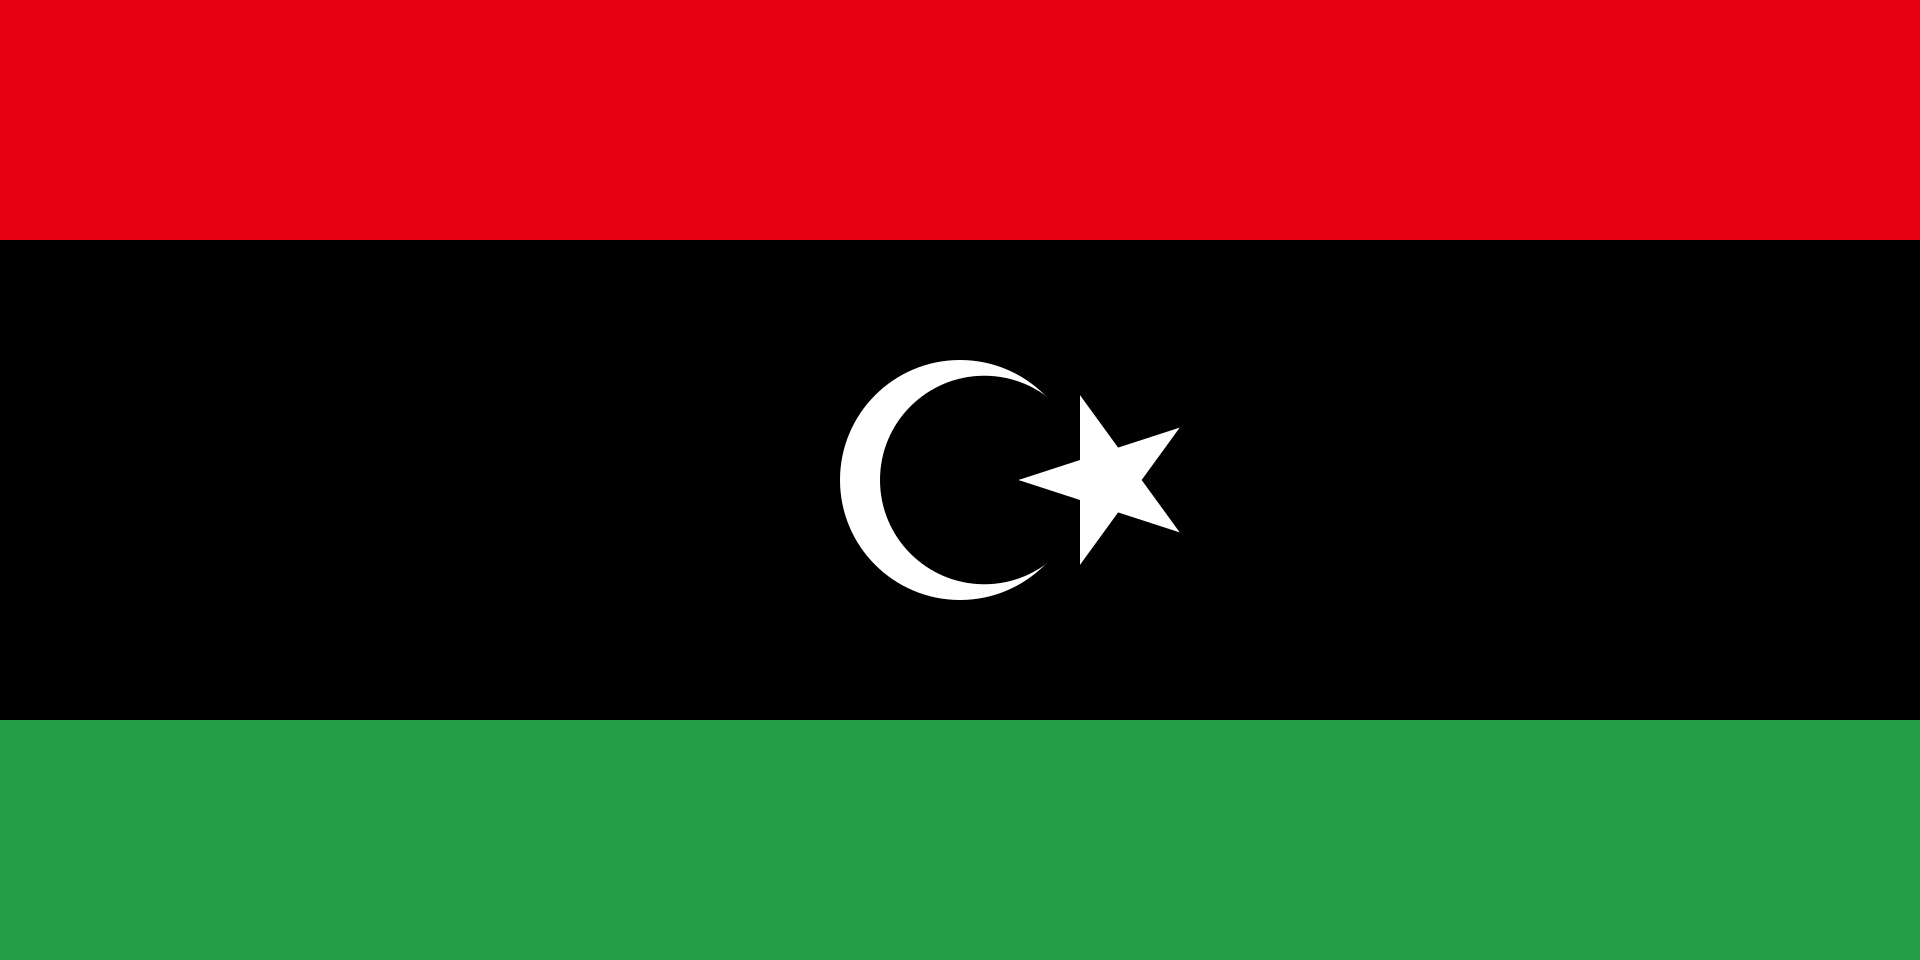 The present flag of Libya.